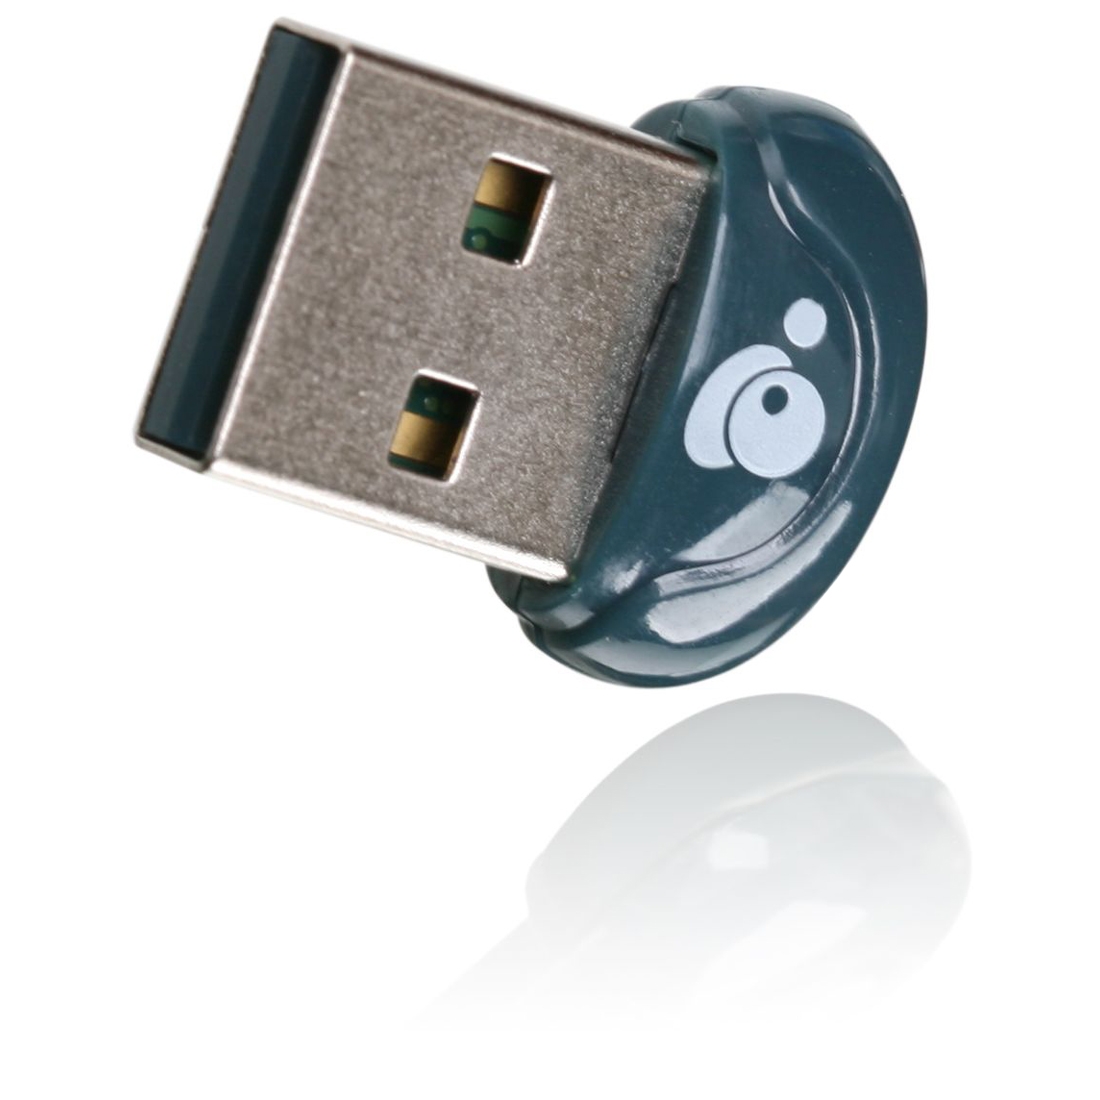 IOGEAR GBU521 USB Bluetooth 4.0 Micro Adapter - image 2 of 2